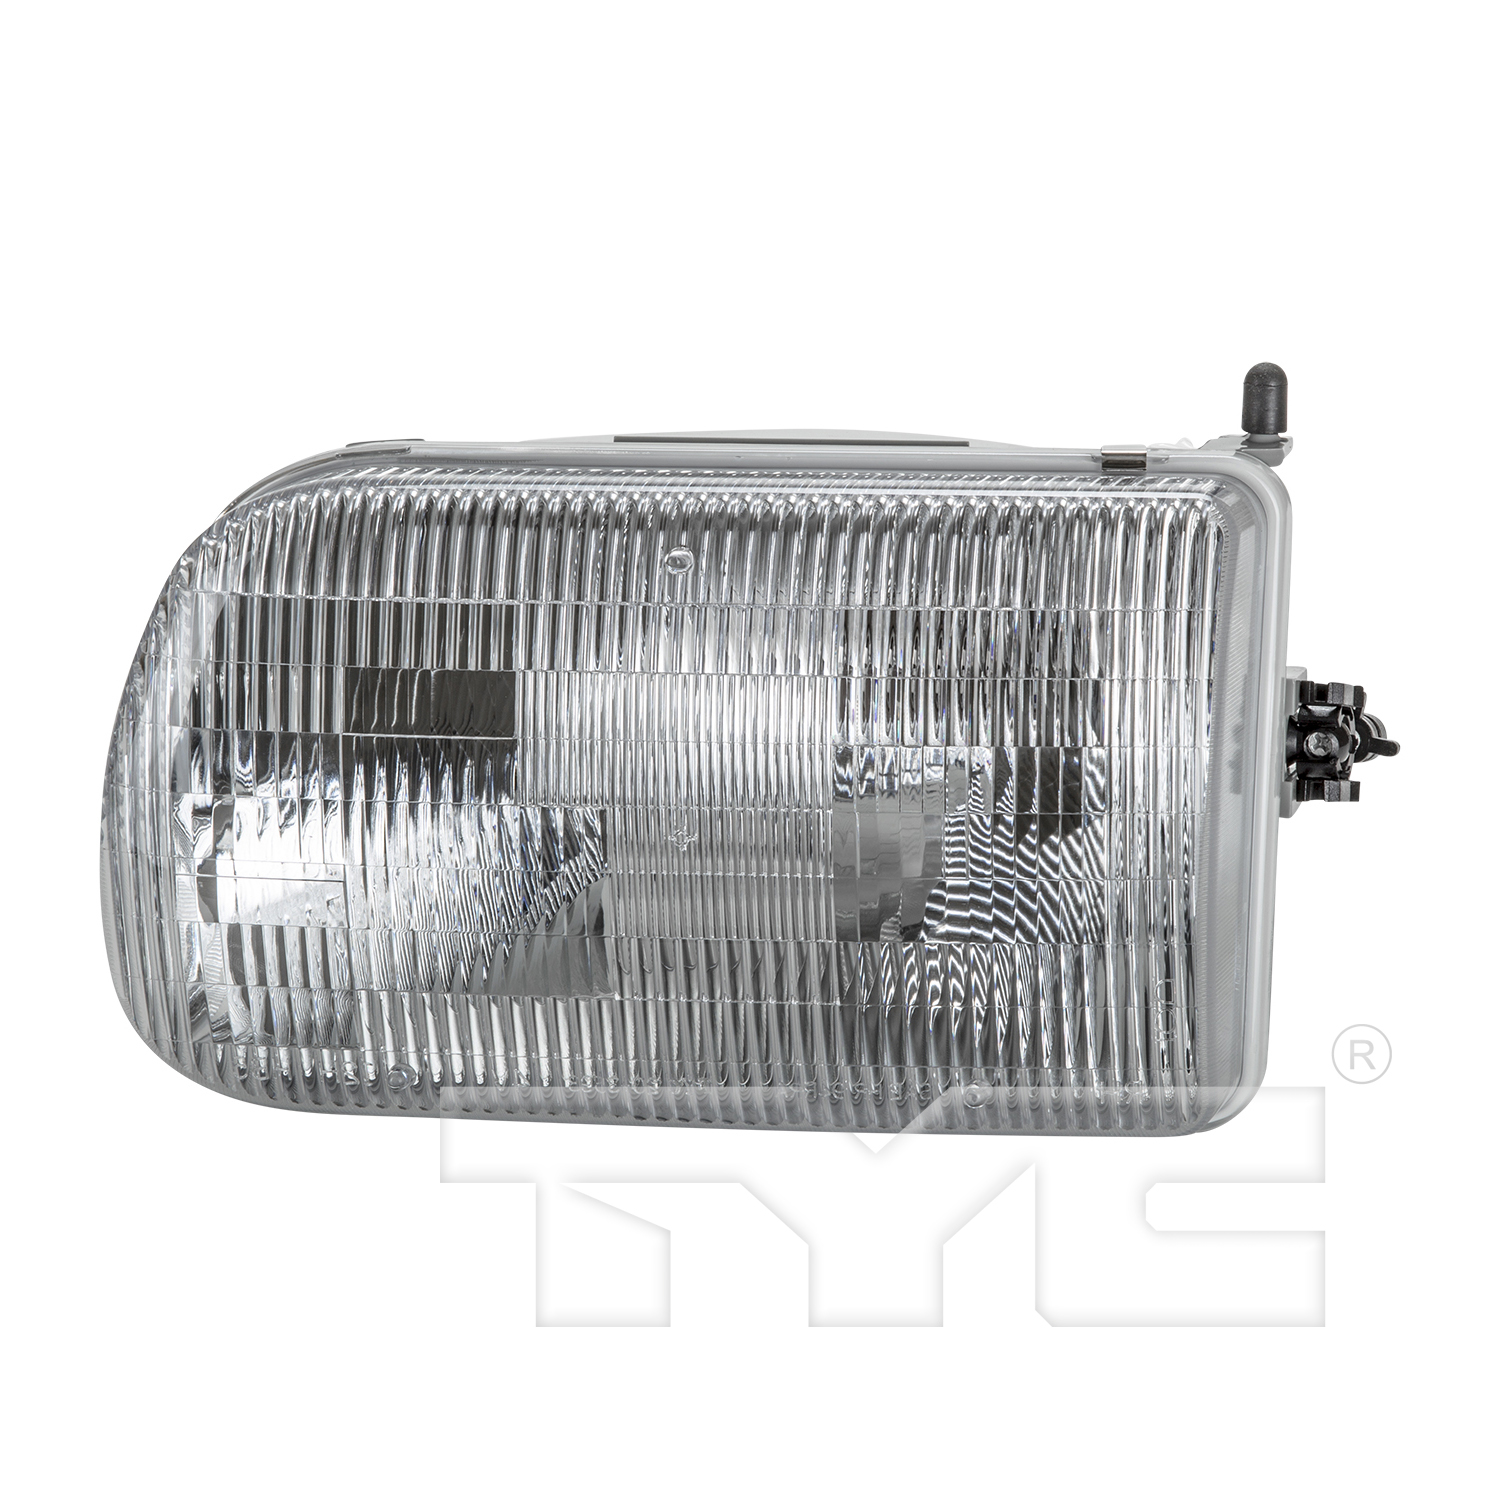 Aftermarket HEADLIGHTS for MAZDA - B3000, B3000,94-97,LT Headlamp assy composite